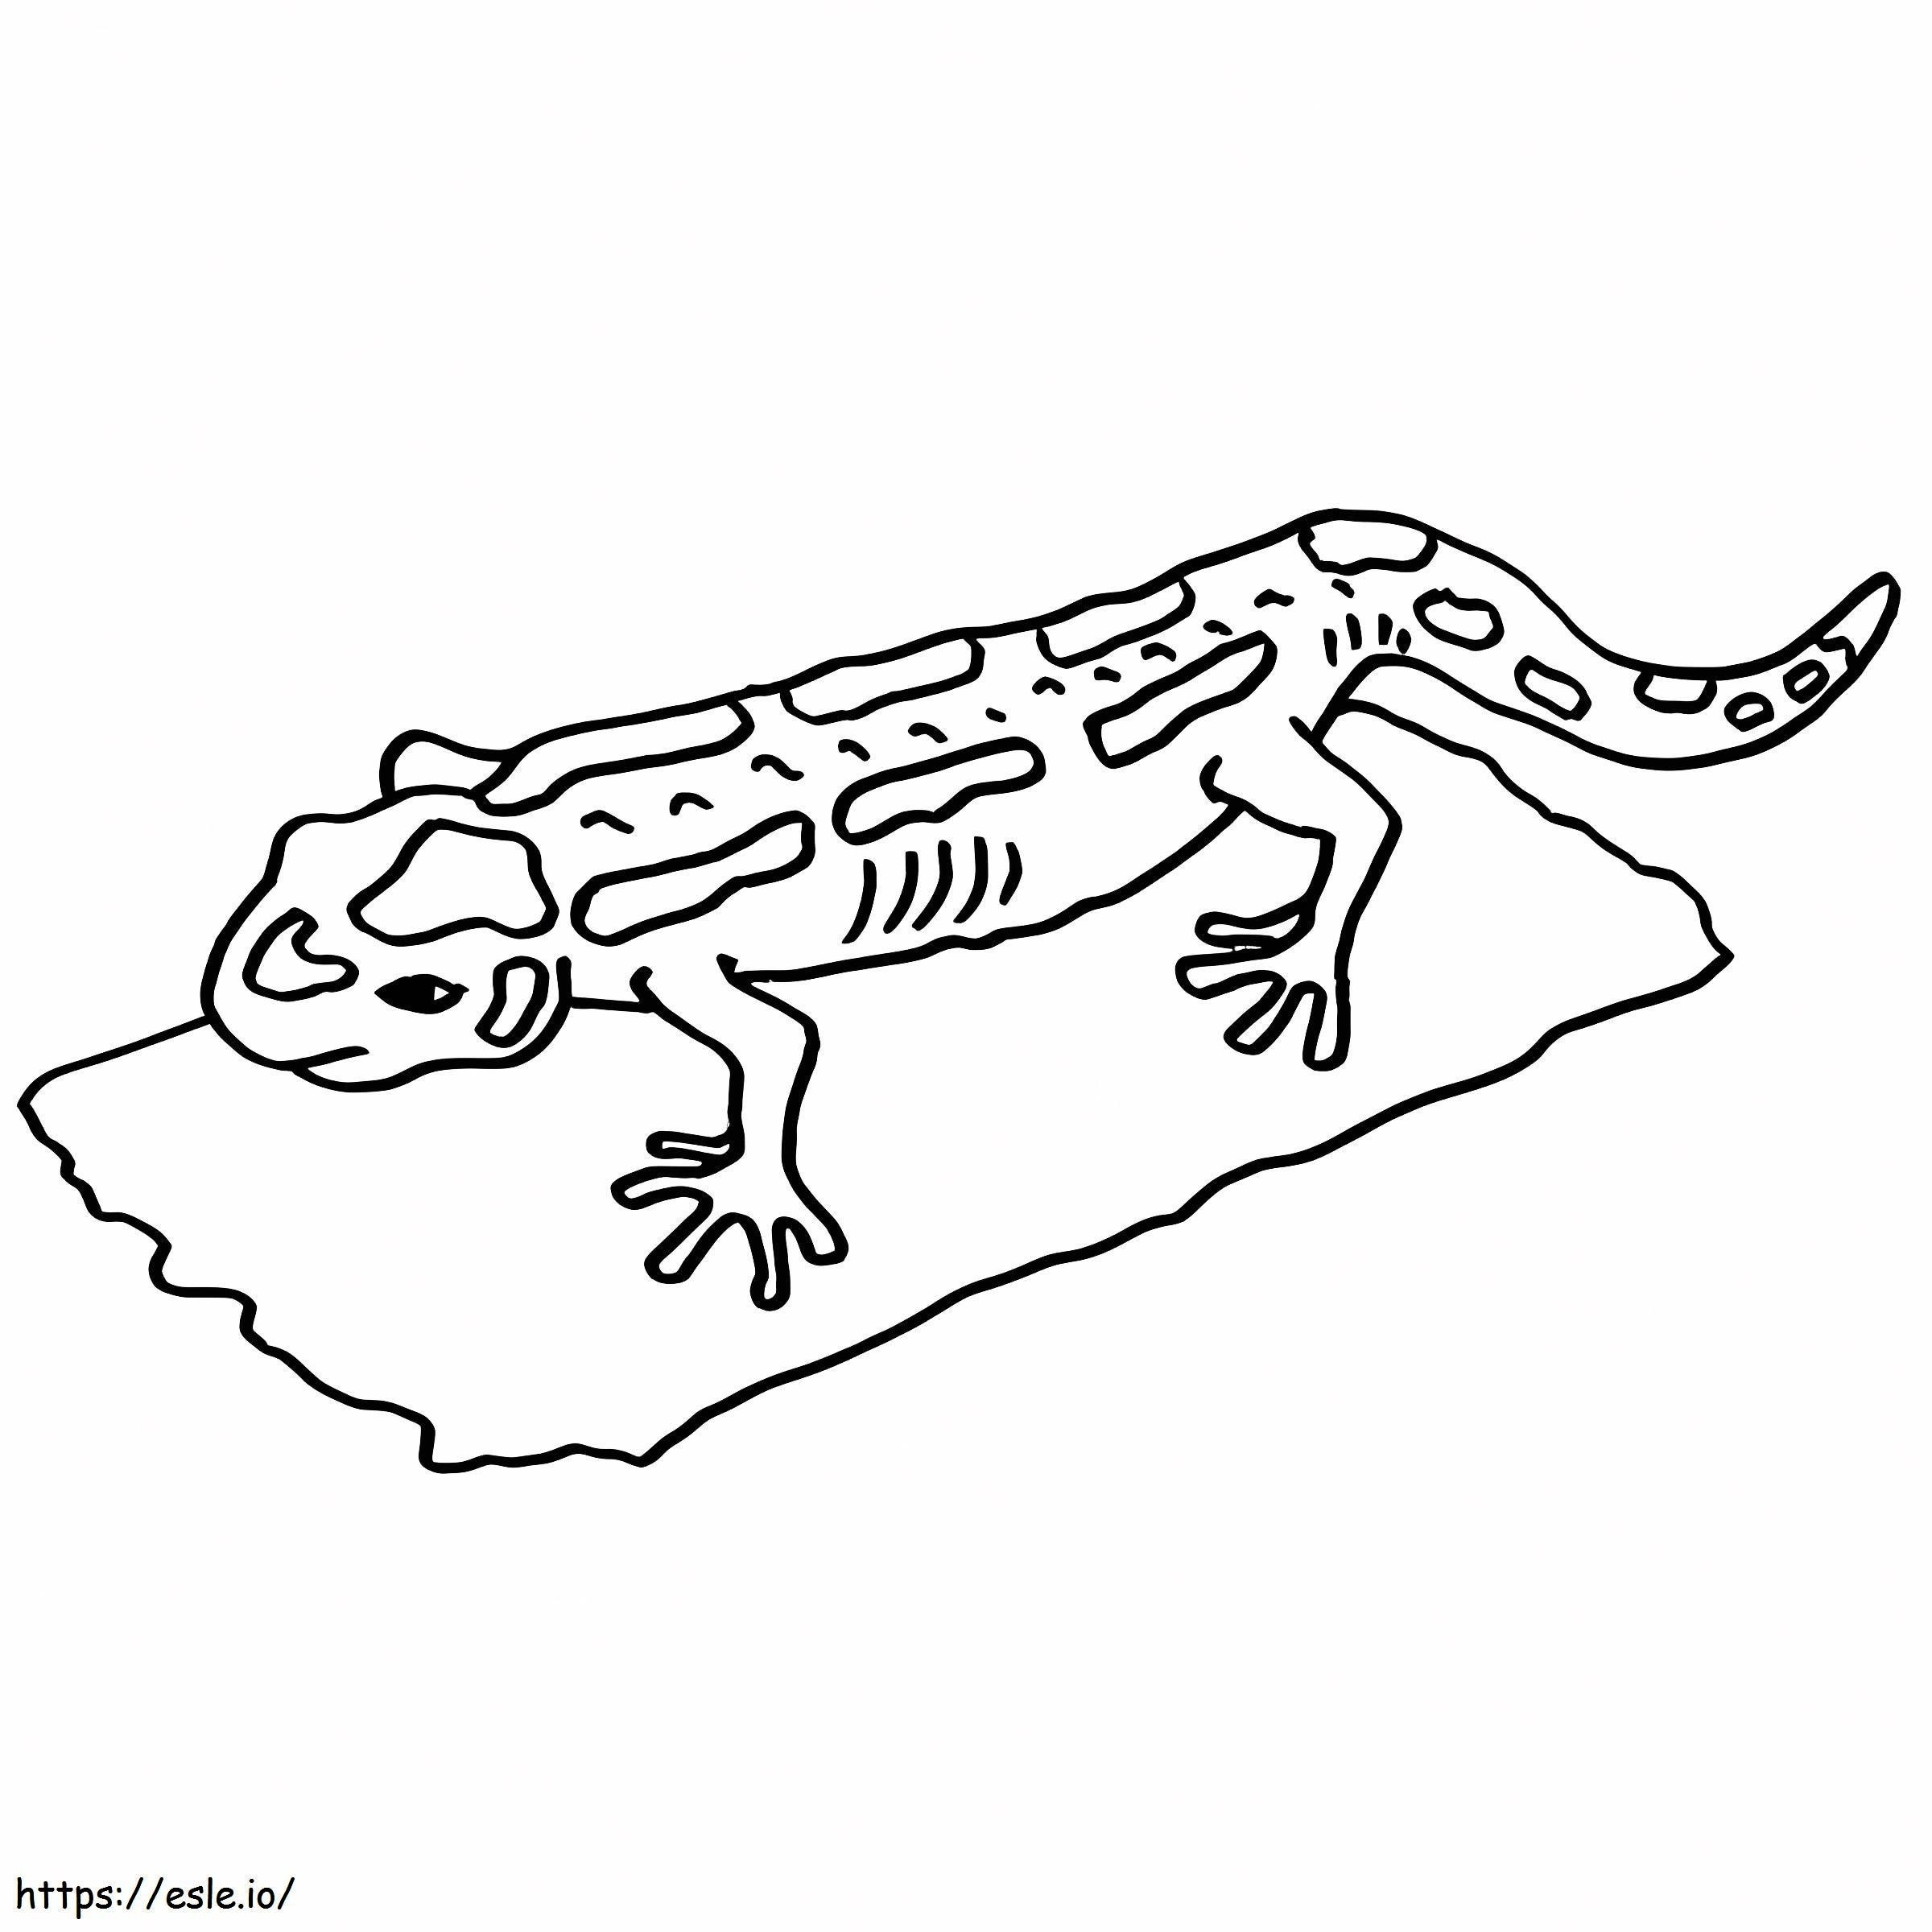 Printable Salamander coloring page